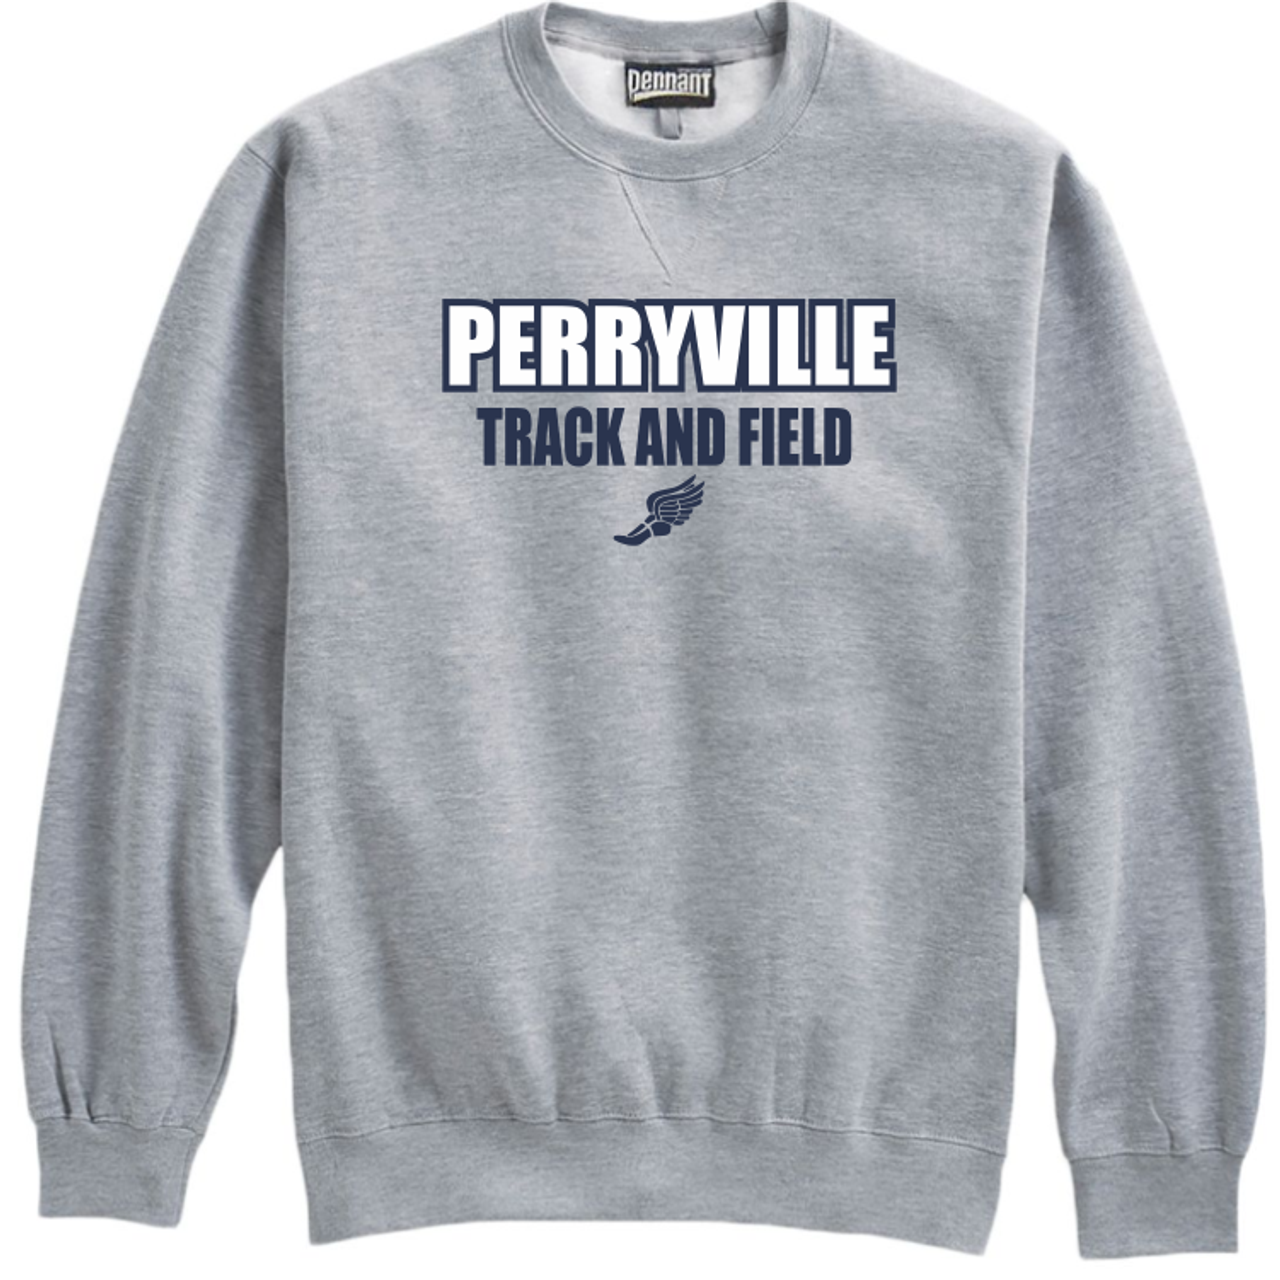 Perryville MS Track & Field Crewneck Sweatshirt, Gray